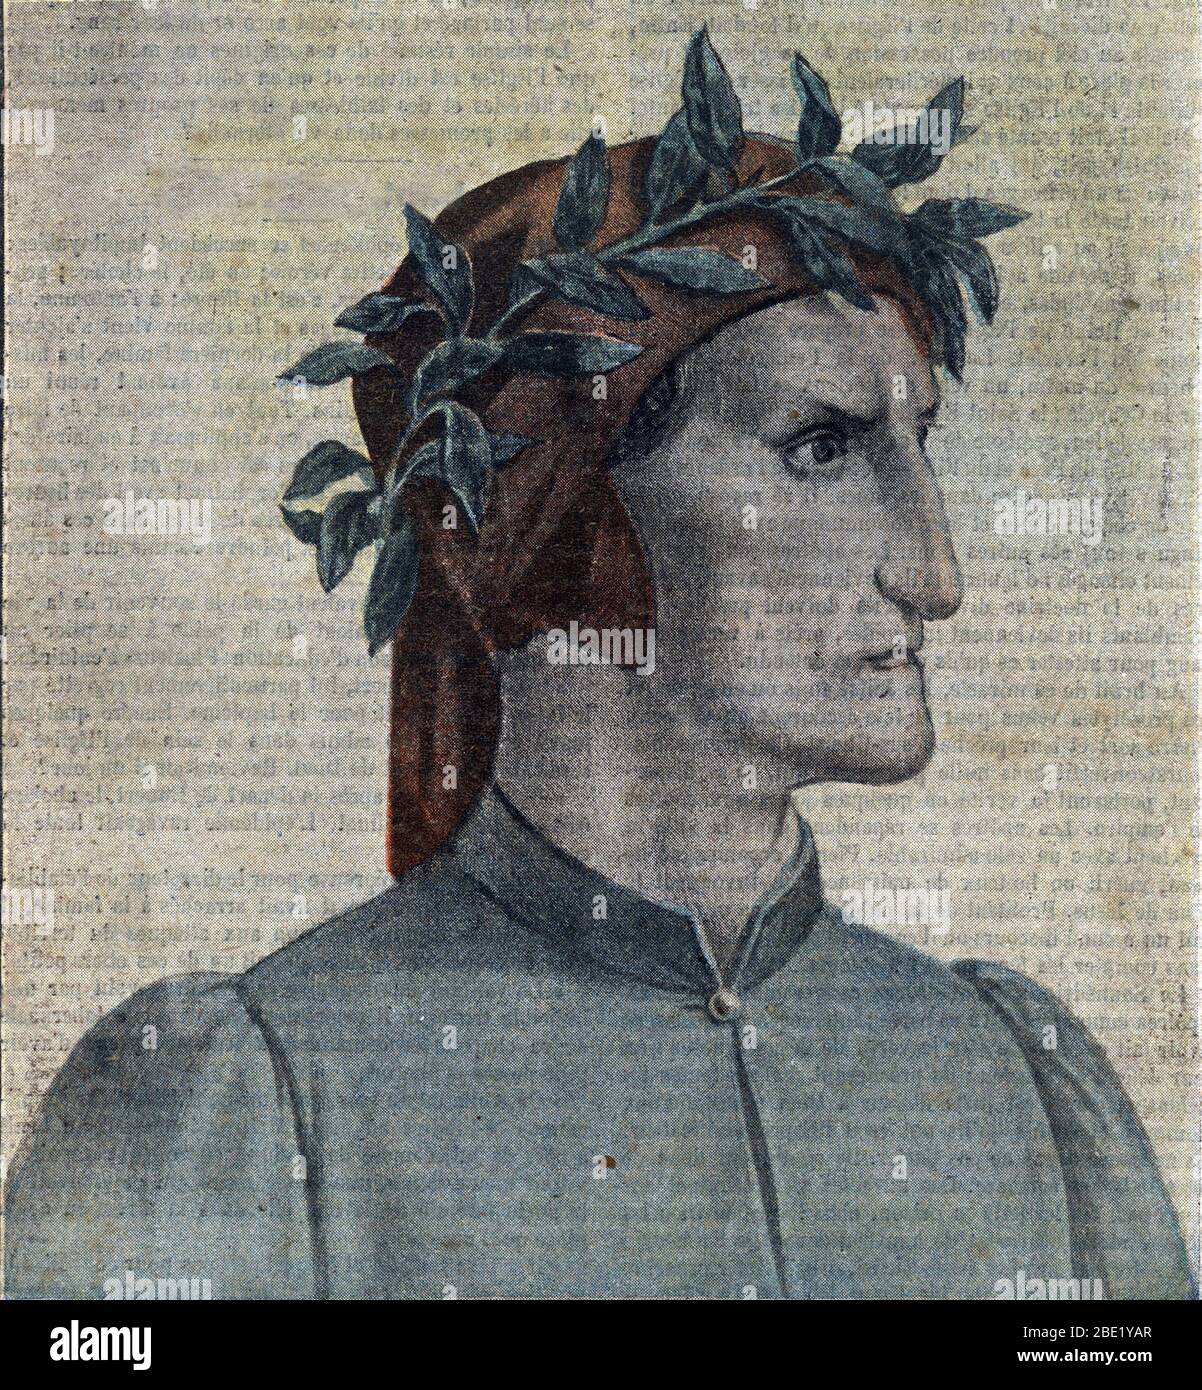 'Portrait du poete italien Dante Alighieri (1265-1321)' (Italian poet Dante Alighieri) Illustration from 'Le pelerin' may 1921 Private collection Stock Photo